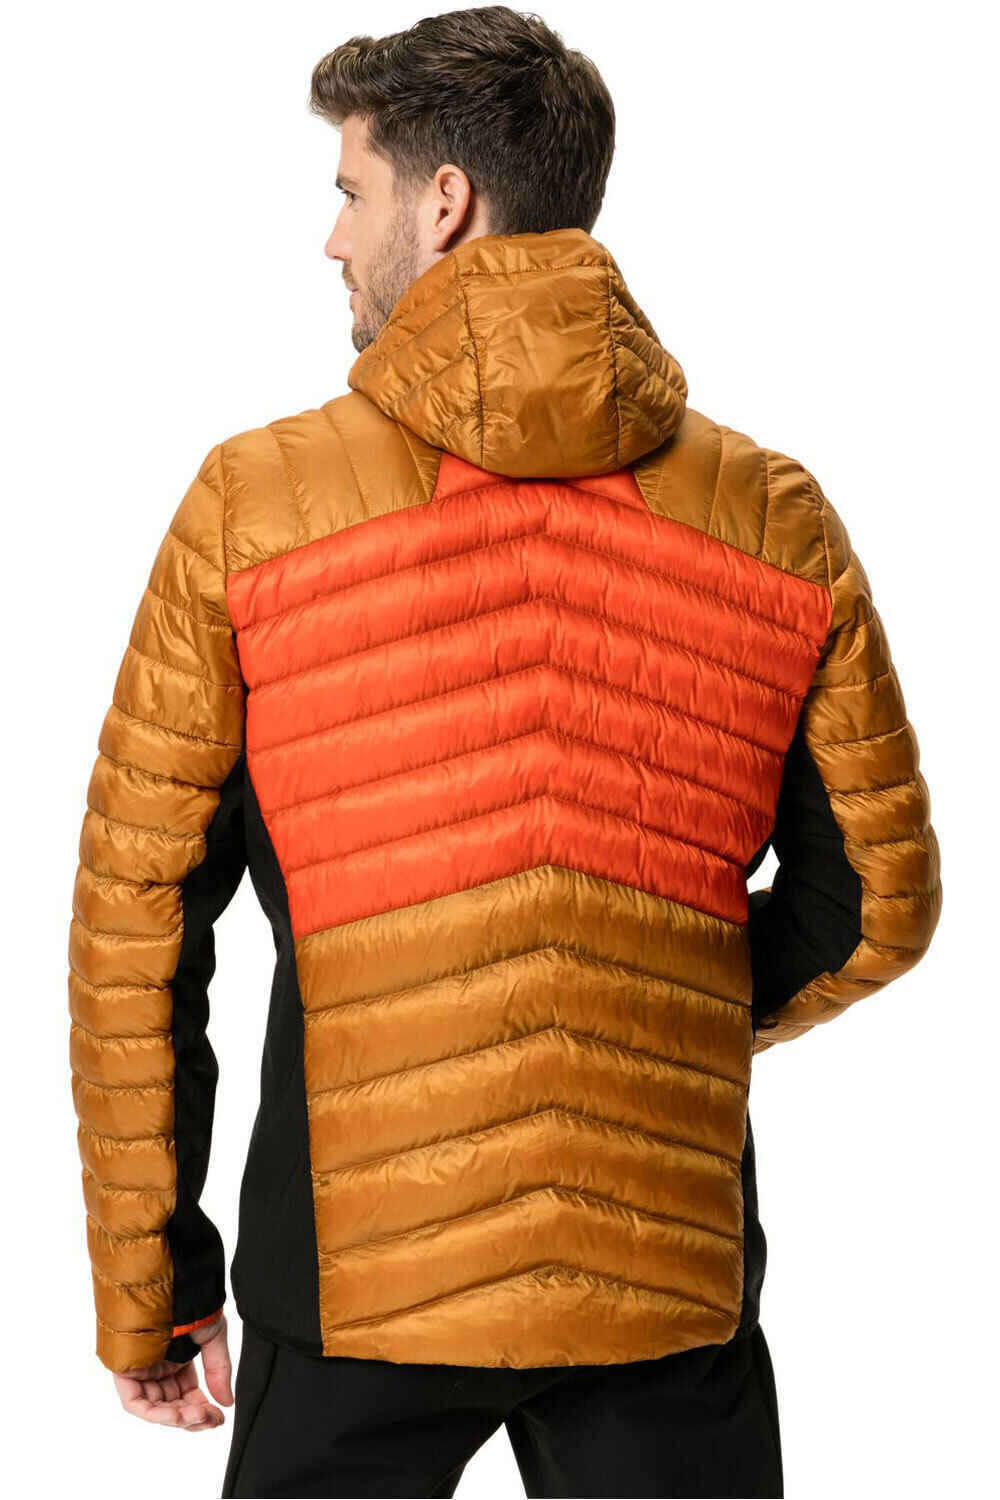 Vaude chaqueta outdoor hombre Men's Sesvenna Pro Jacket II vista trasera